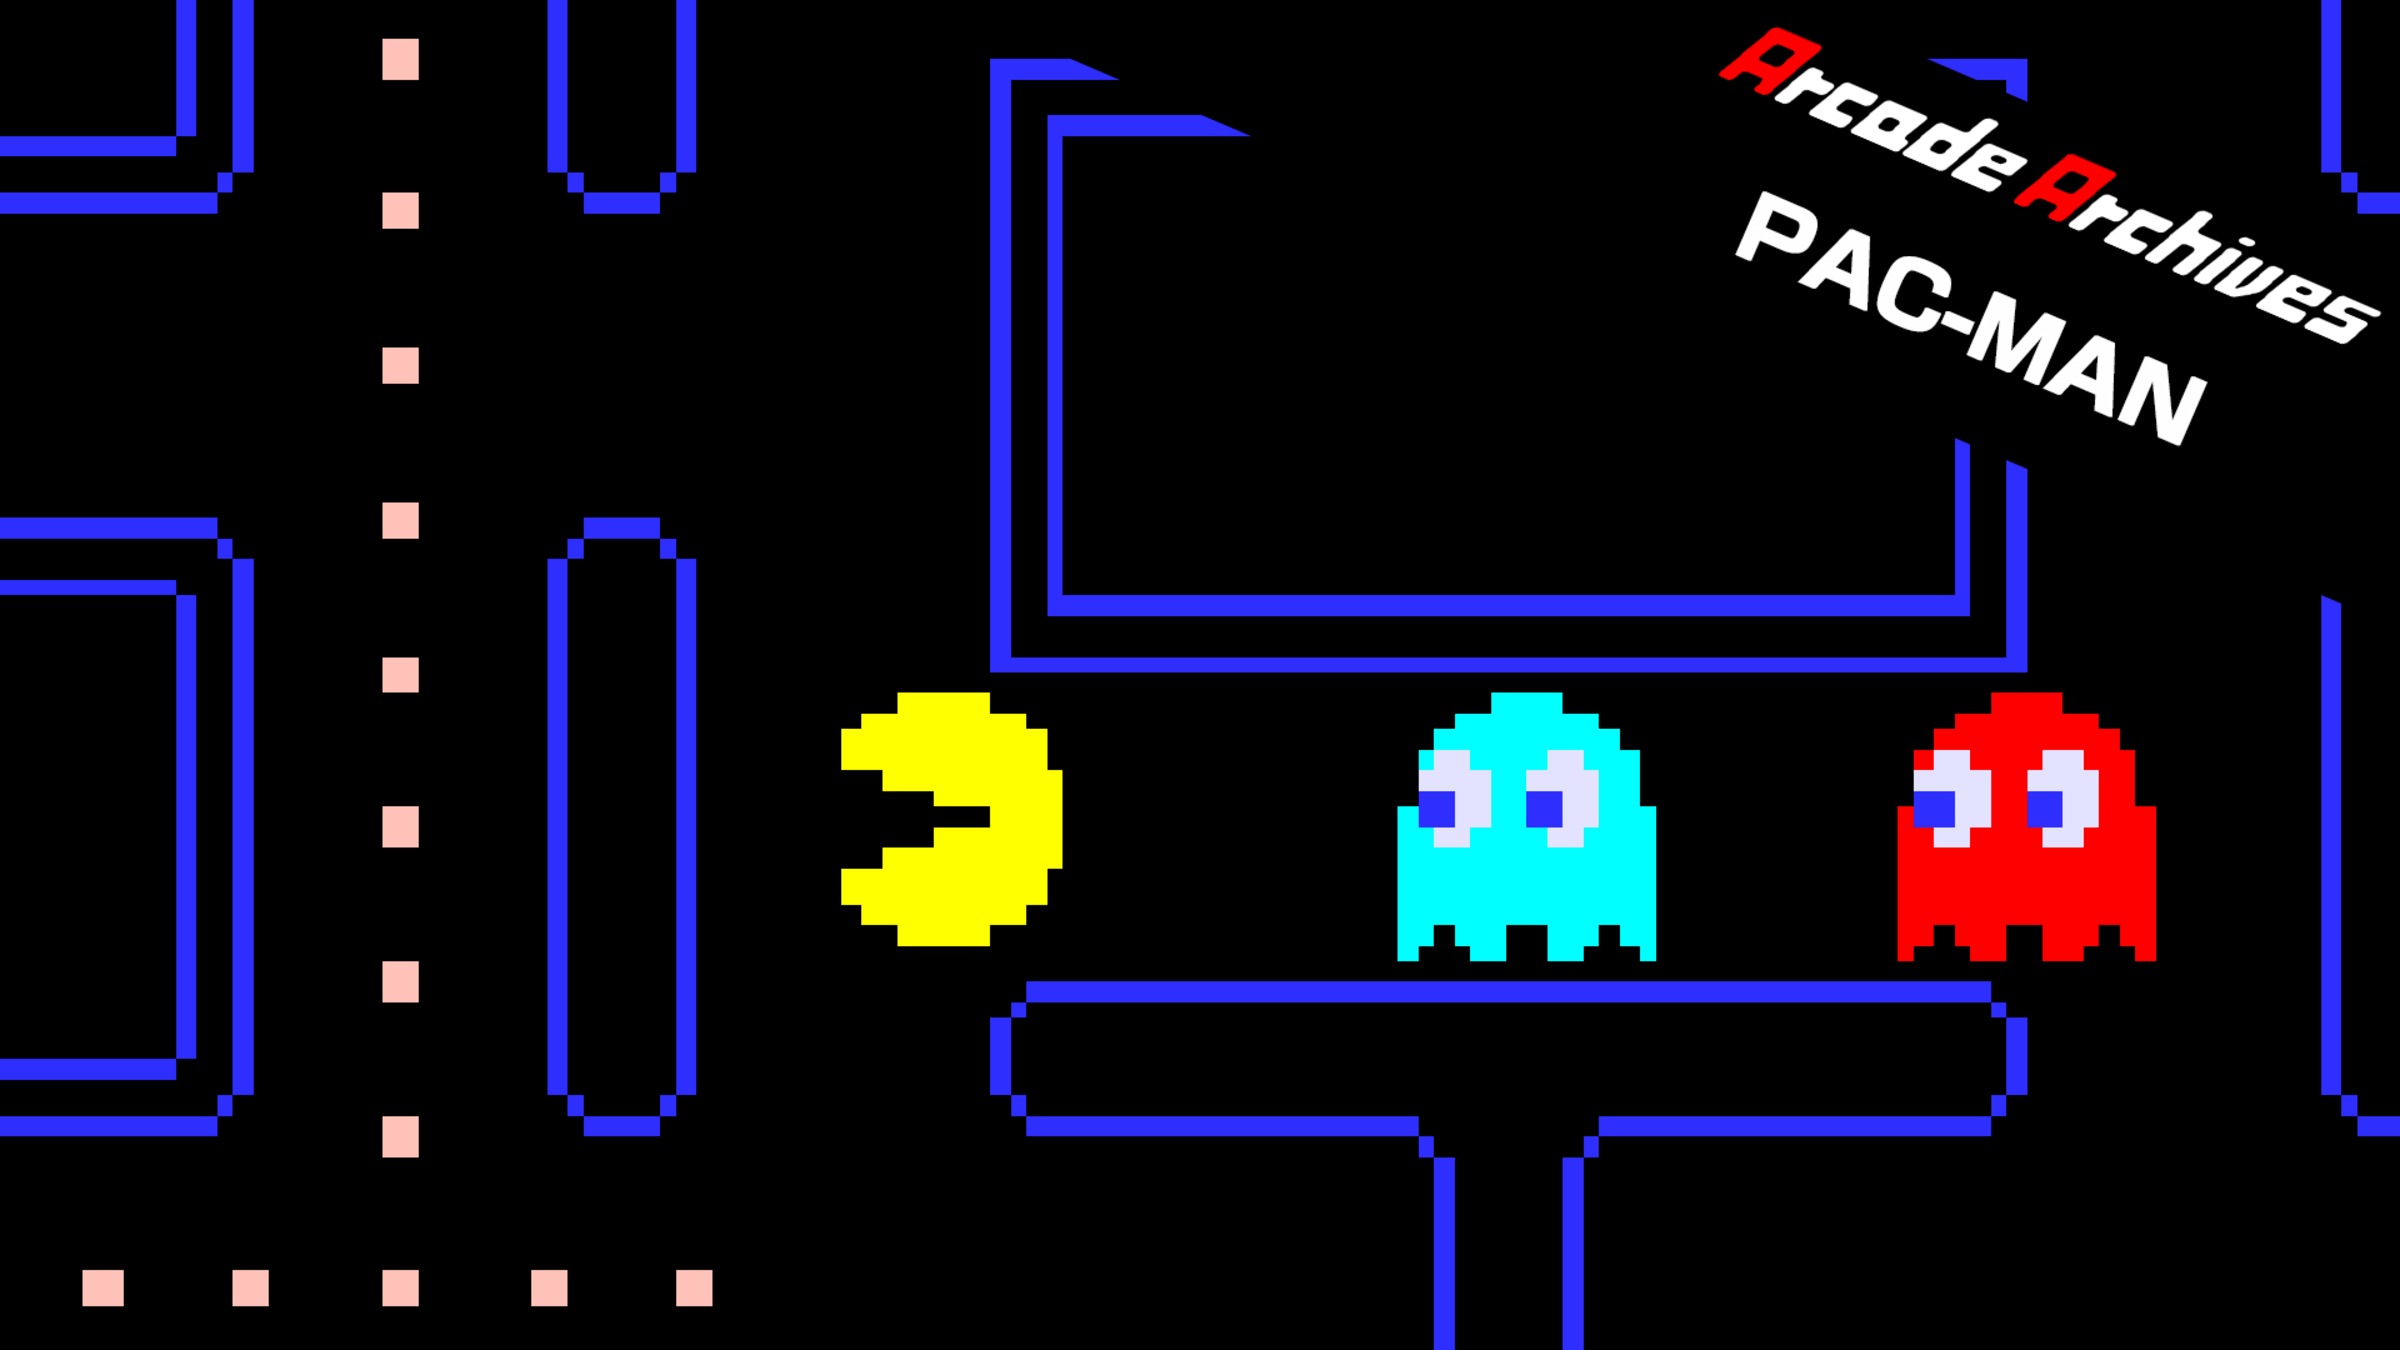 Arcade PAC-MAN for Nintendo Switch Nintendo Official Site